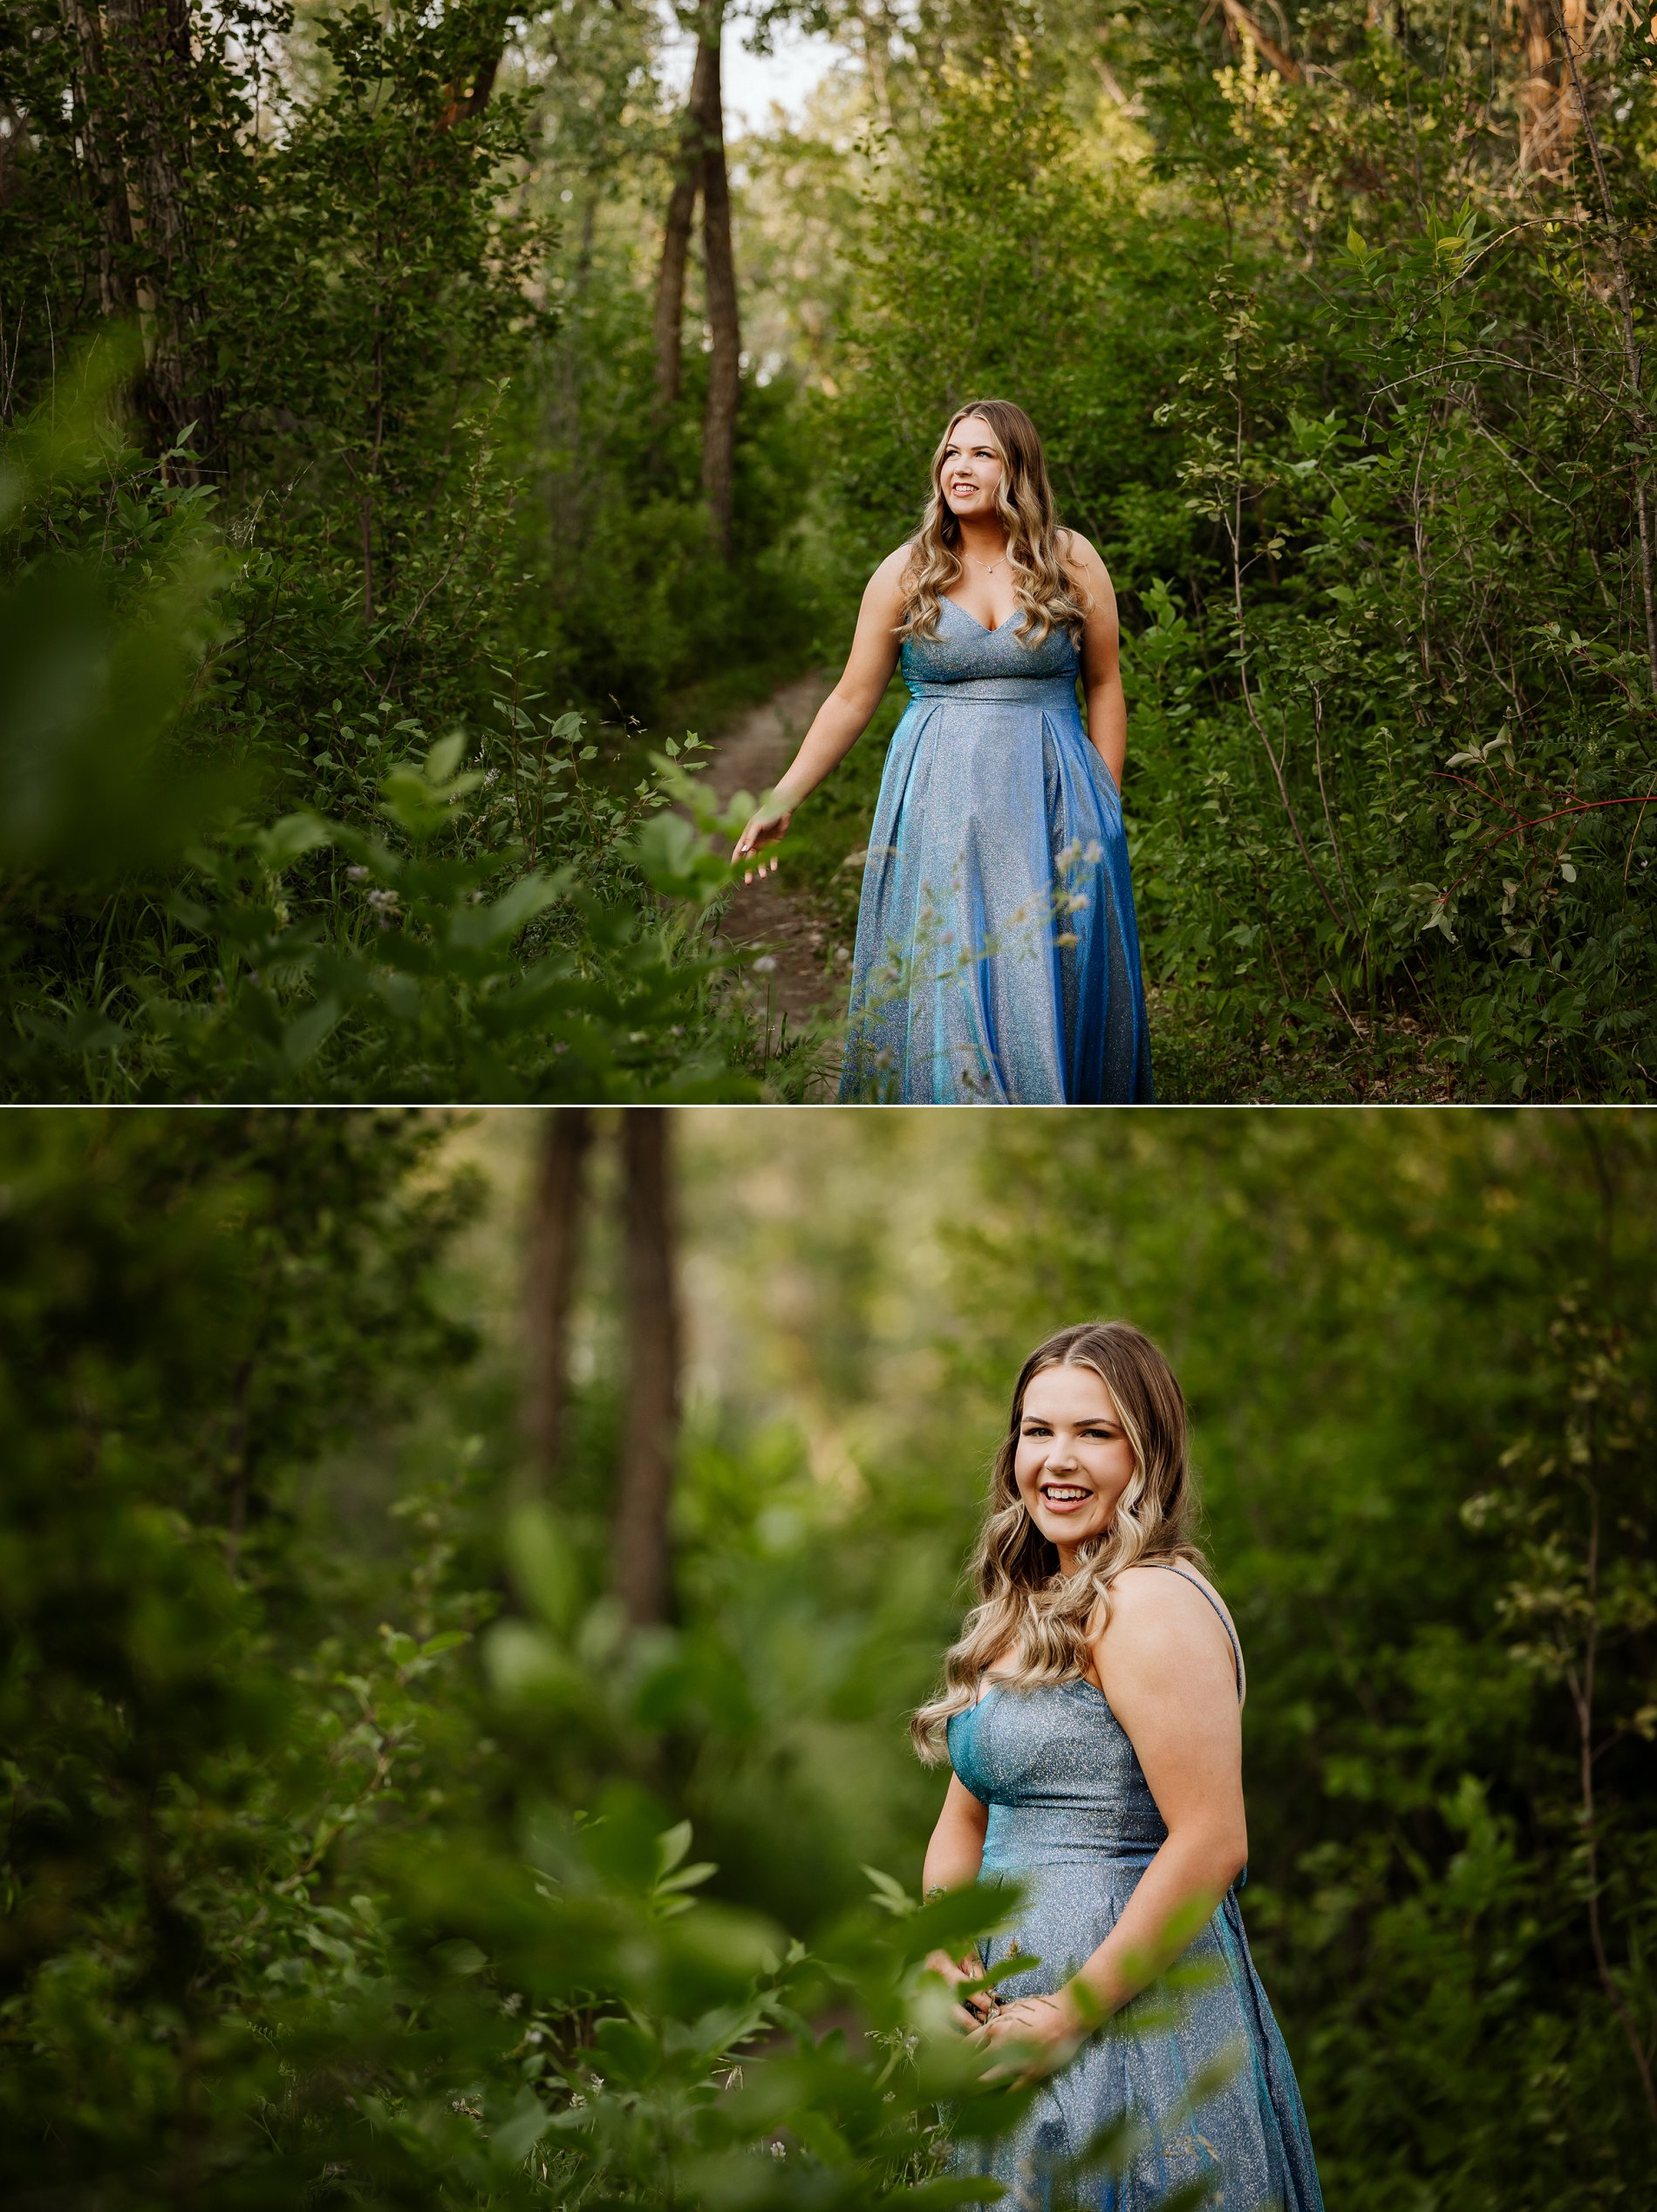 Aden Bowman graduate walks through the forest in a sparkling blue dress.